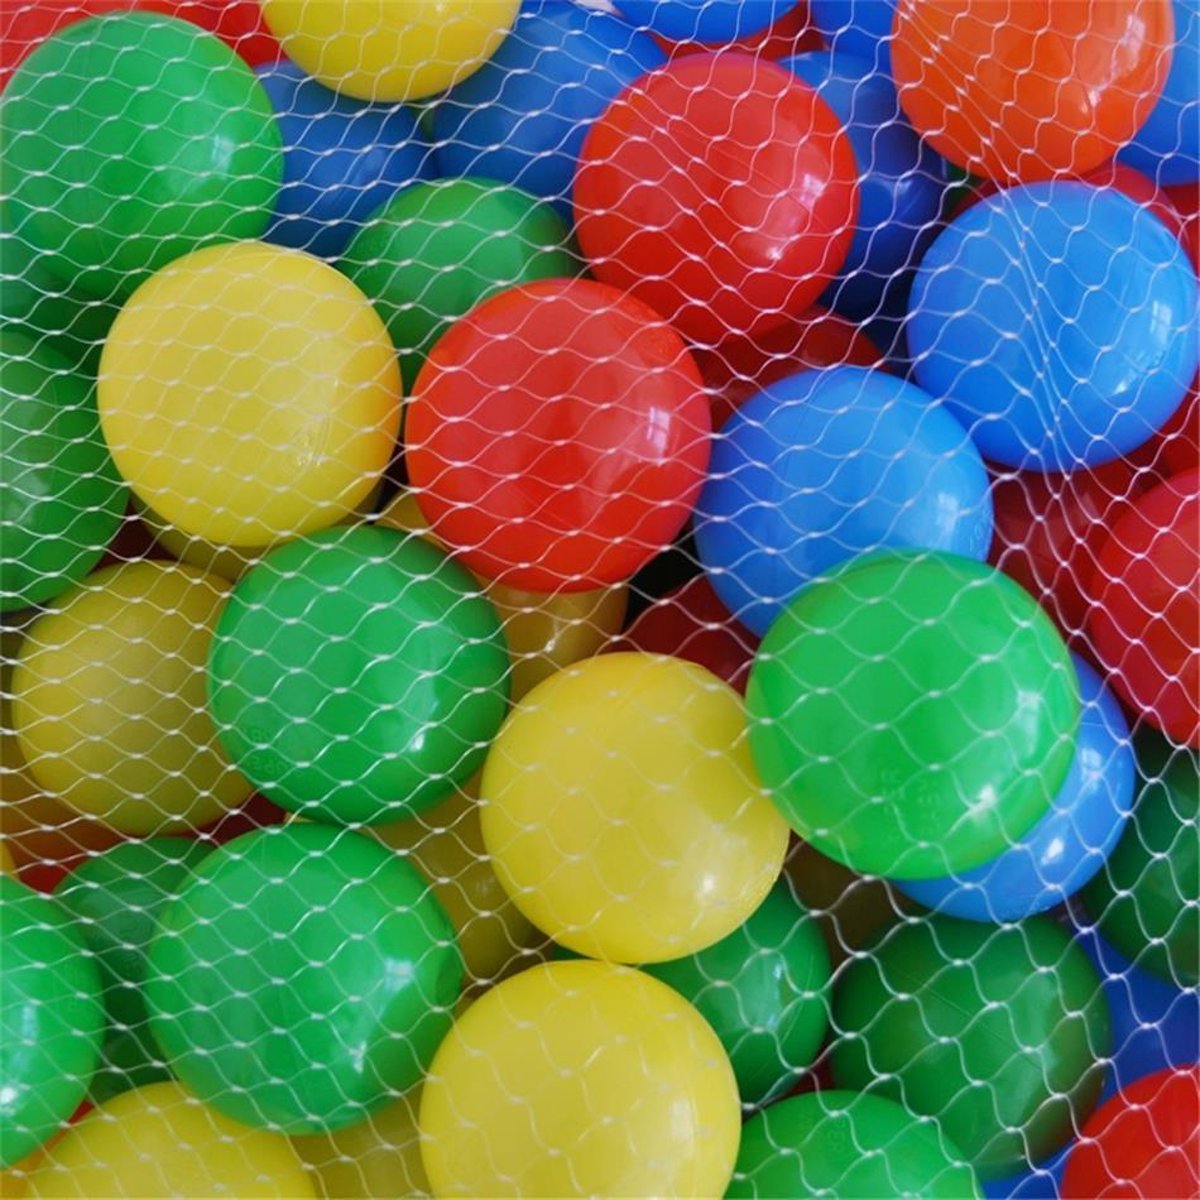 Ballenbakballen, Ballenbak, gekleurde ballen, 1000 stuks